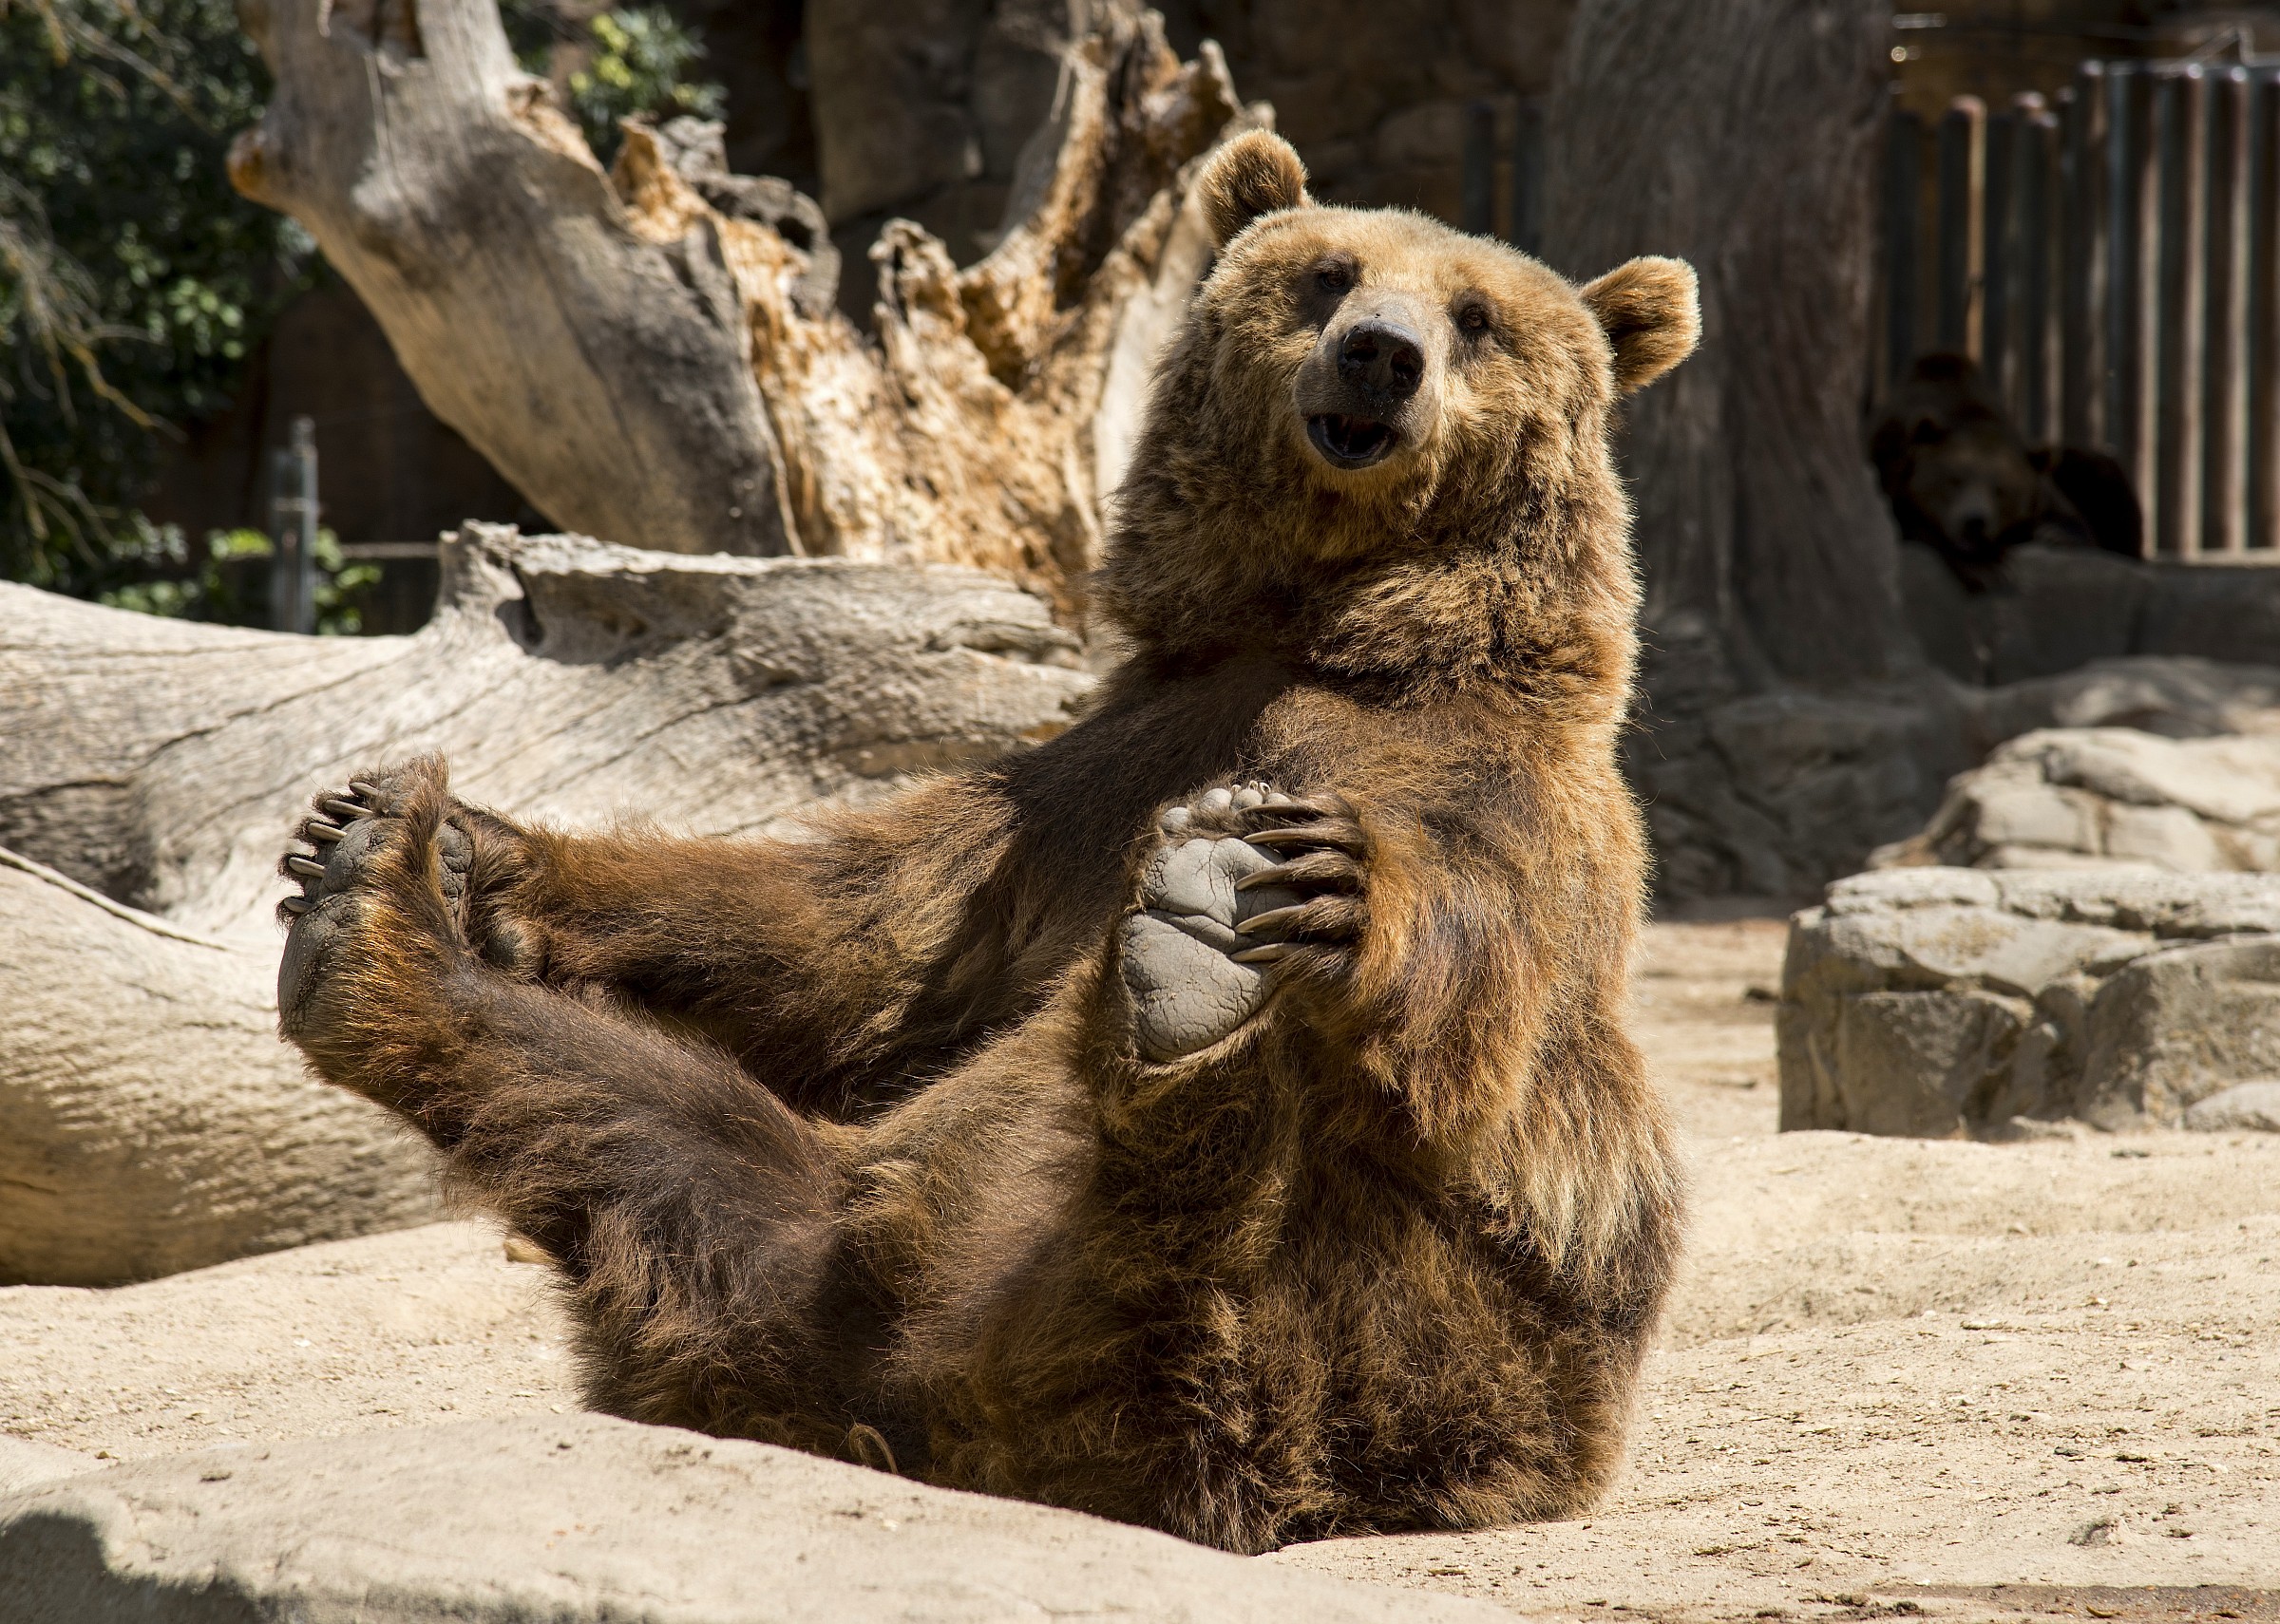 Zoo madrid - bear yoga...